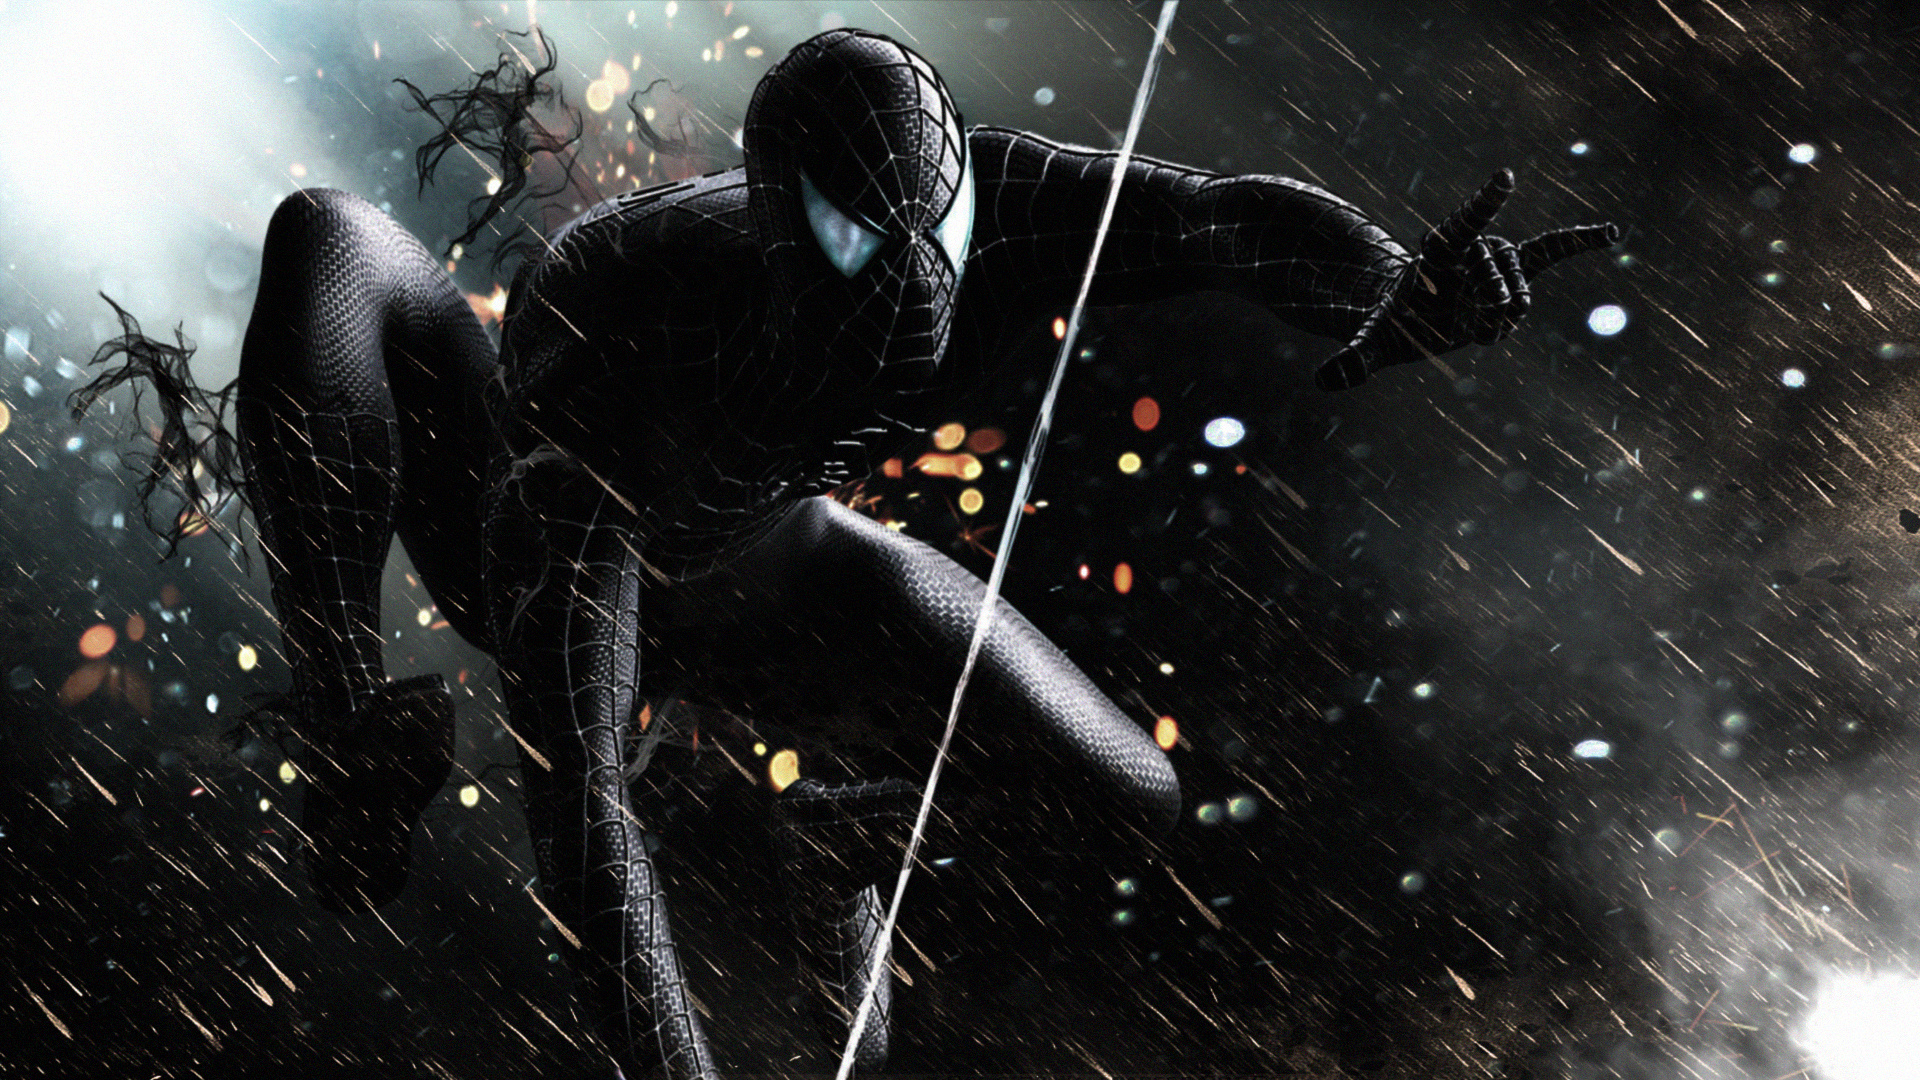 Black Spider-Man, Superhero wallpapers, 4K images, Powerful character, 1920x1080 Full HD Desktop